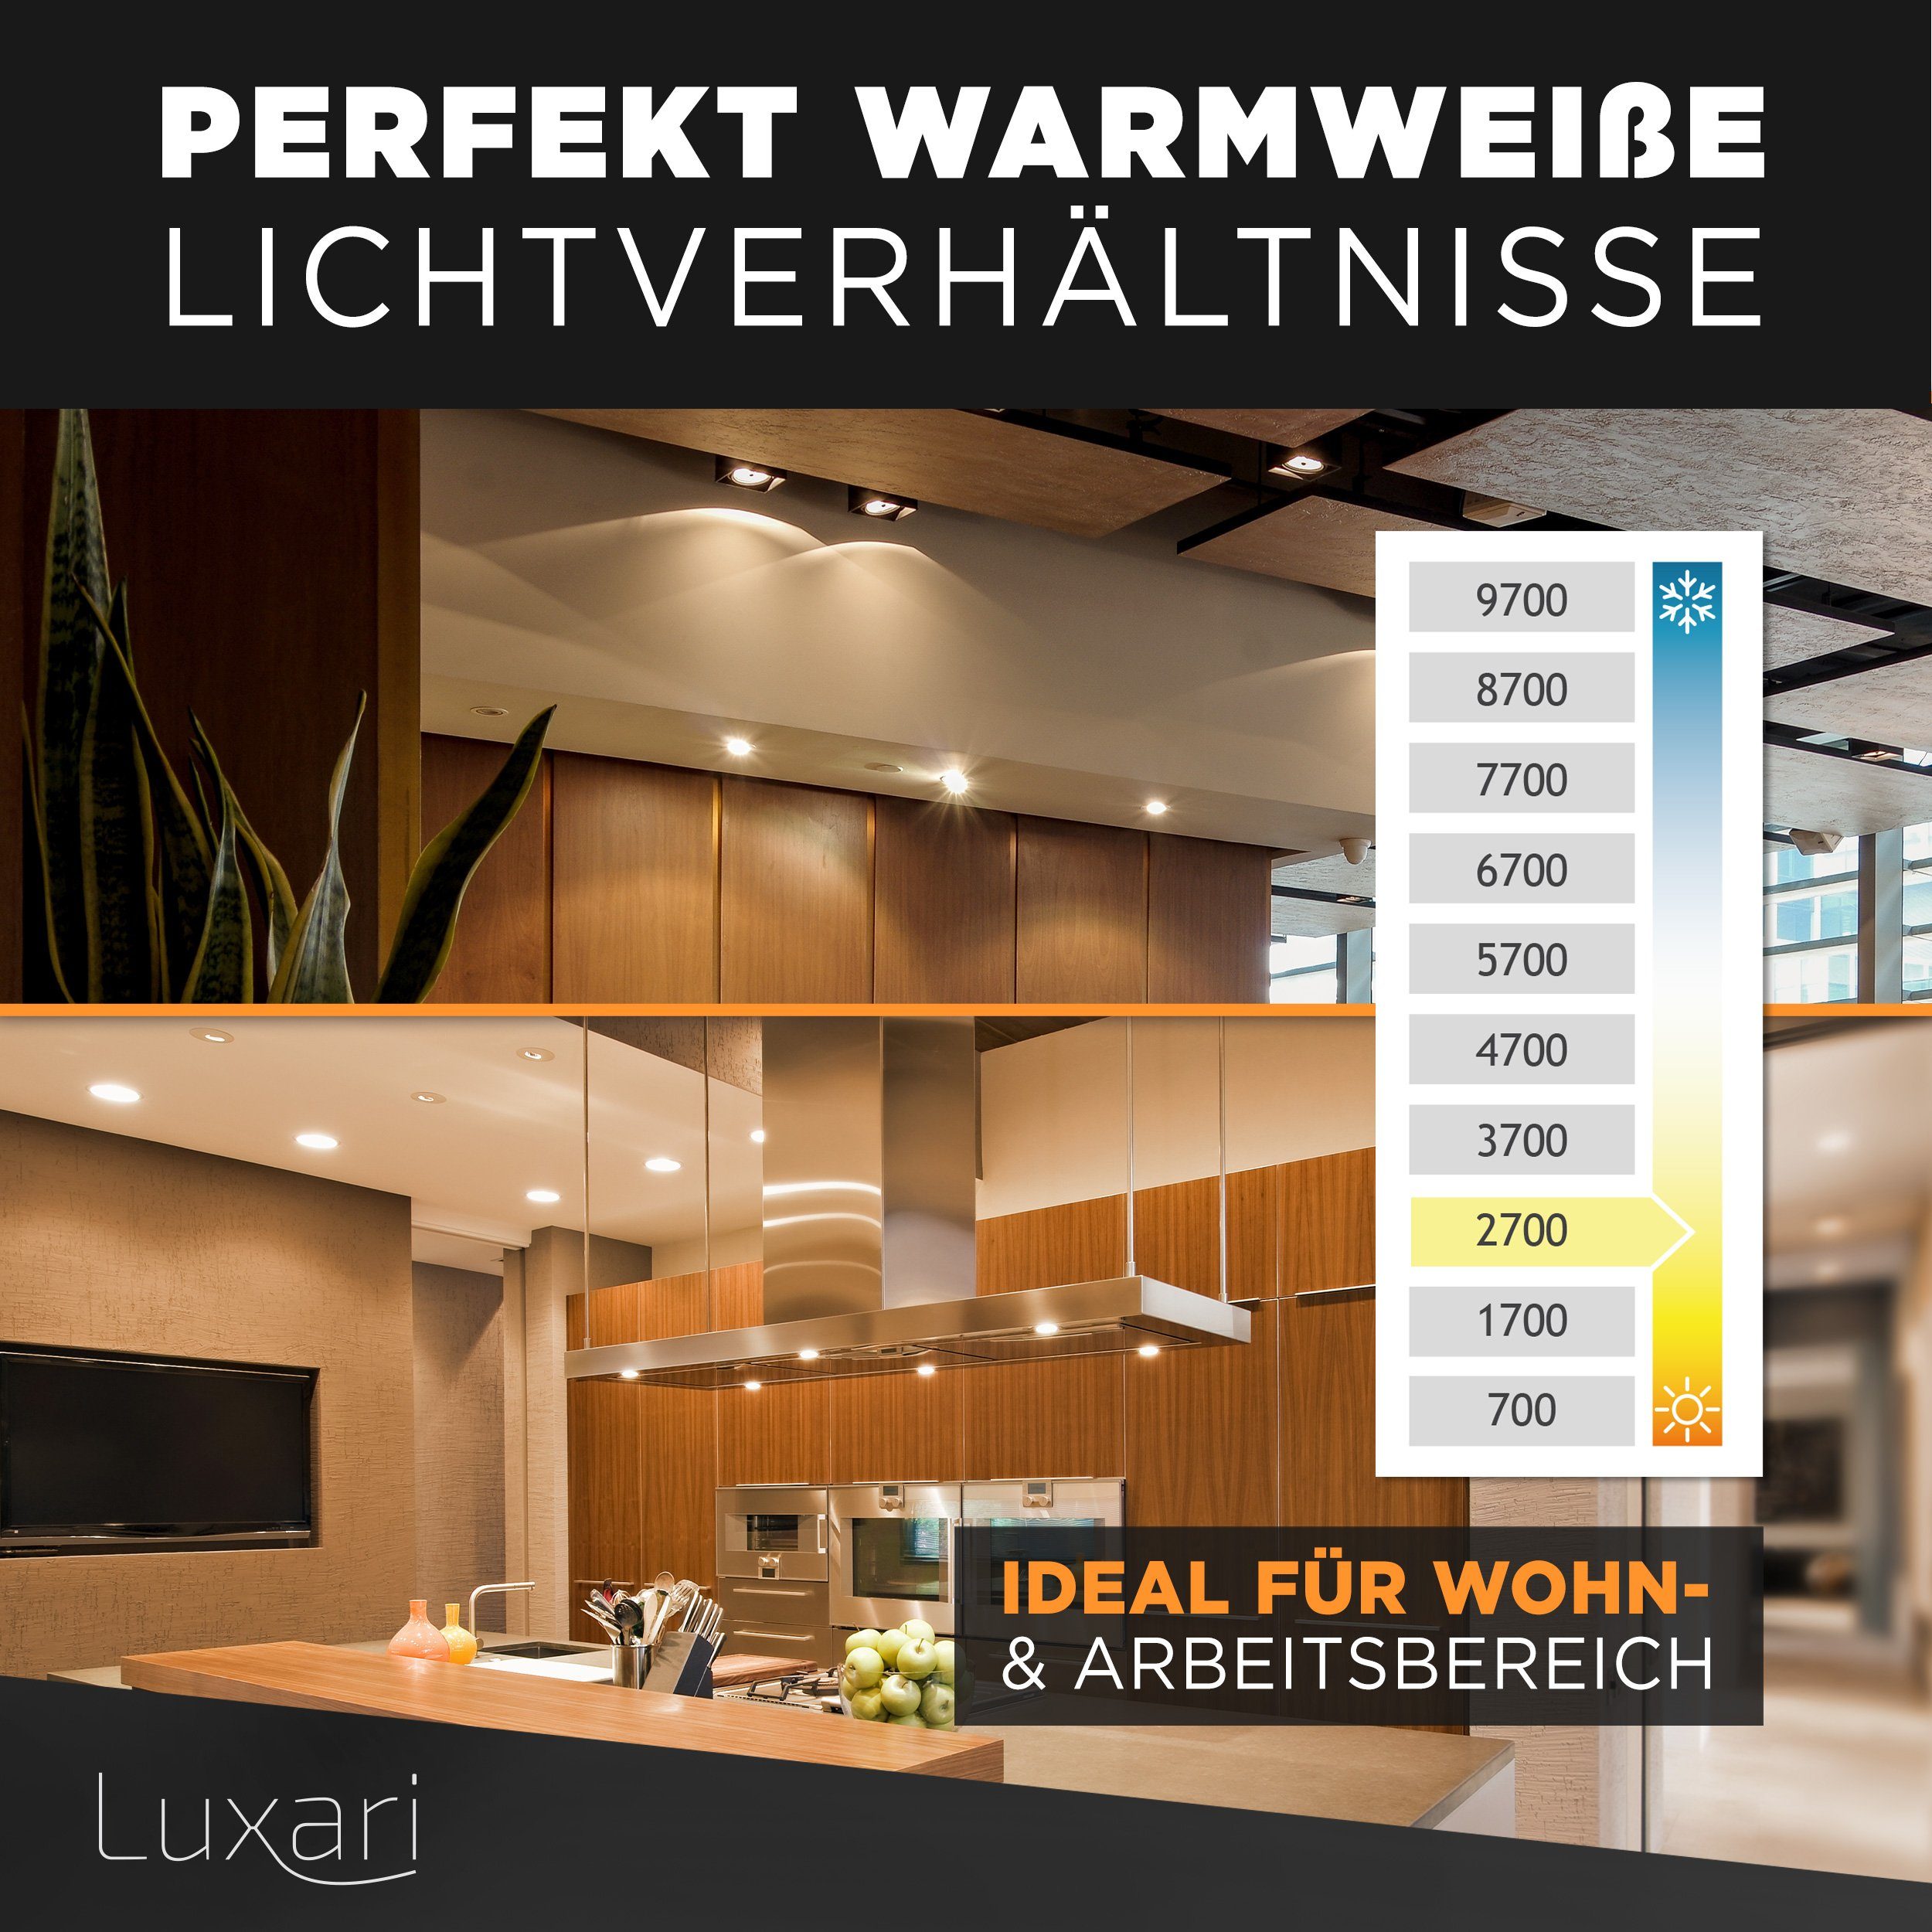 LED MR16 Lampe Deckenleuchte [5x] LED LED − Luxari fest integriert Luxari LED, GU5.3